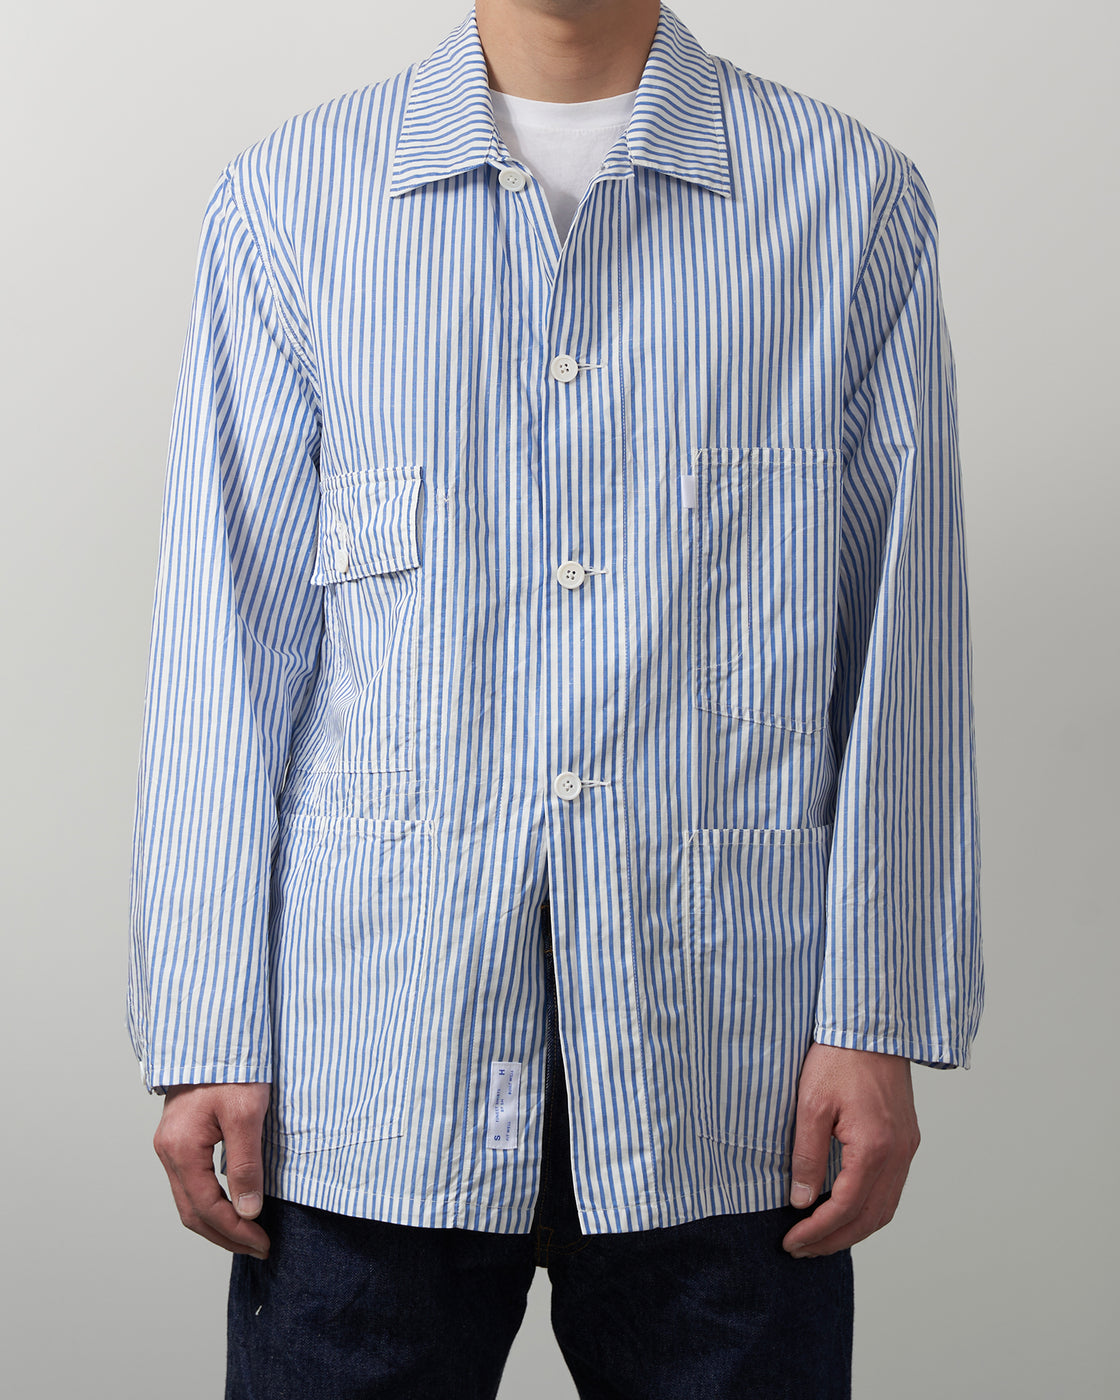 S H CVRL-032 Coverall Shirt(Cotton/Linen), Blue Stripe